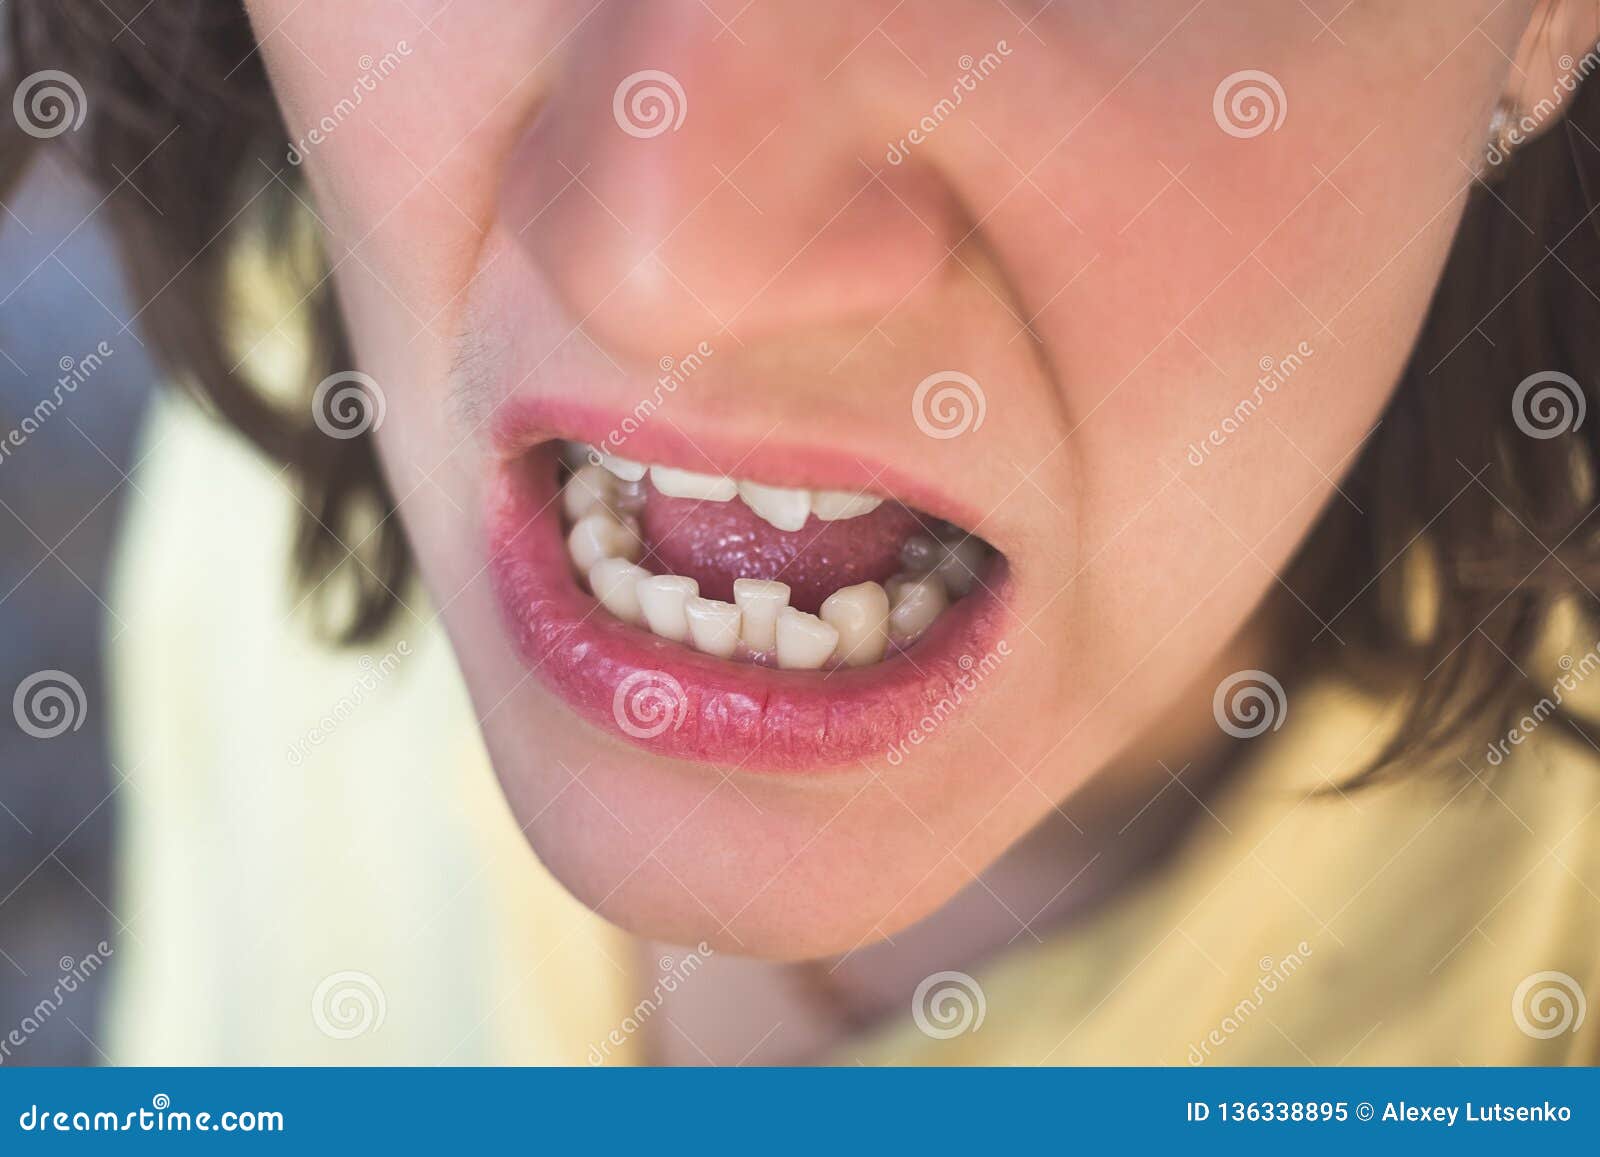 photo of crooked woman teeth